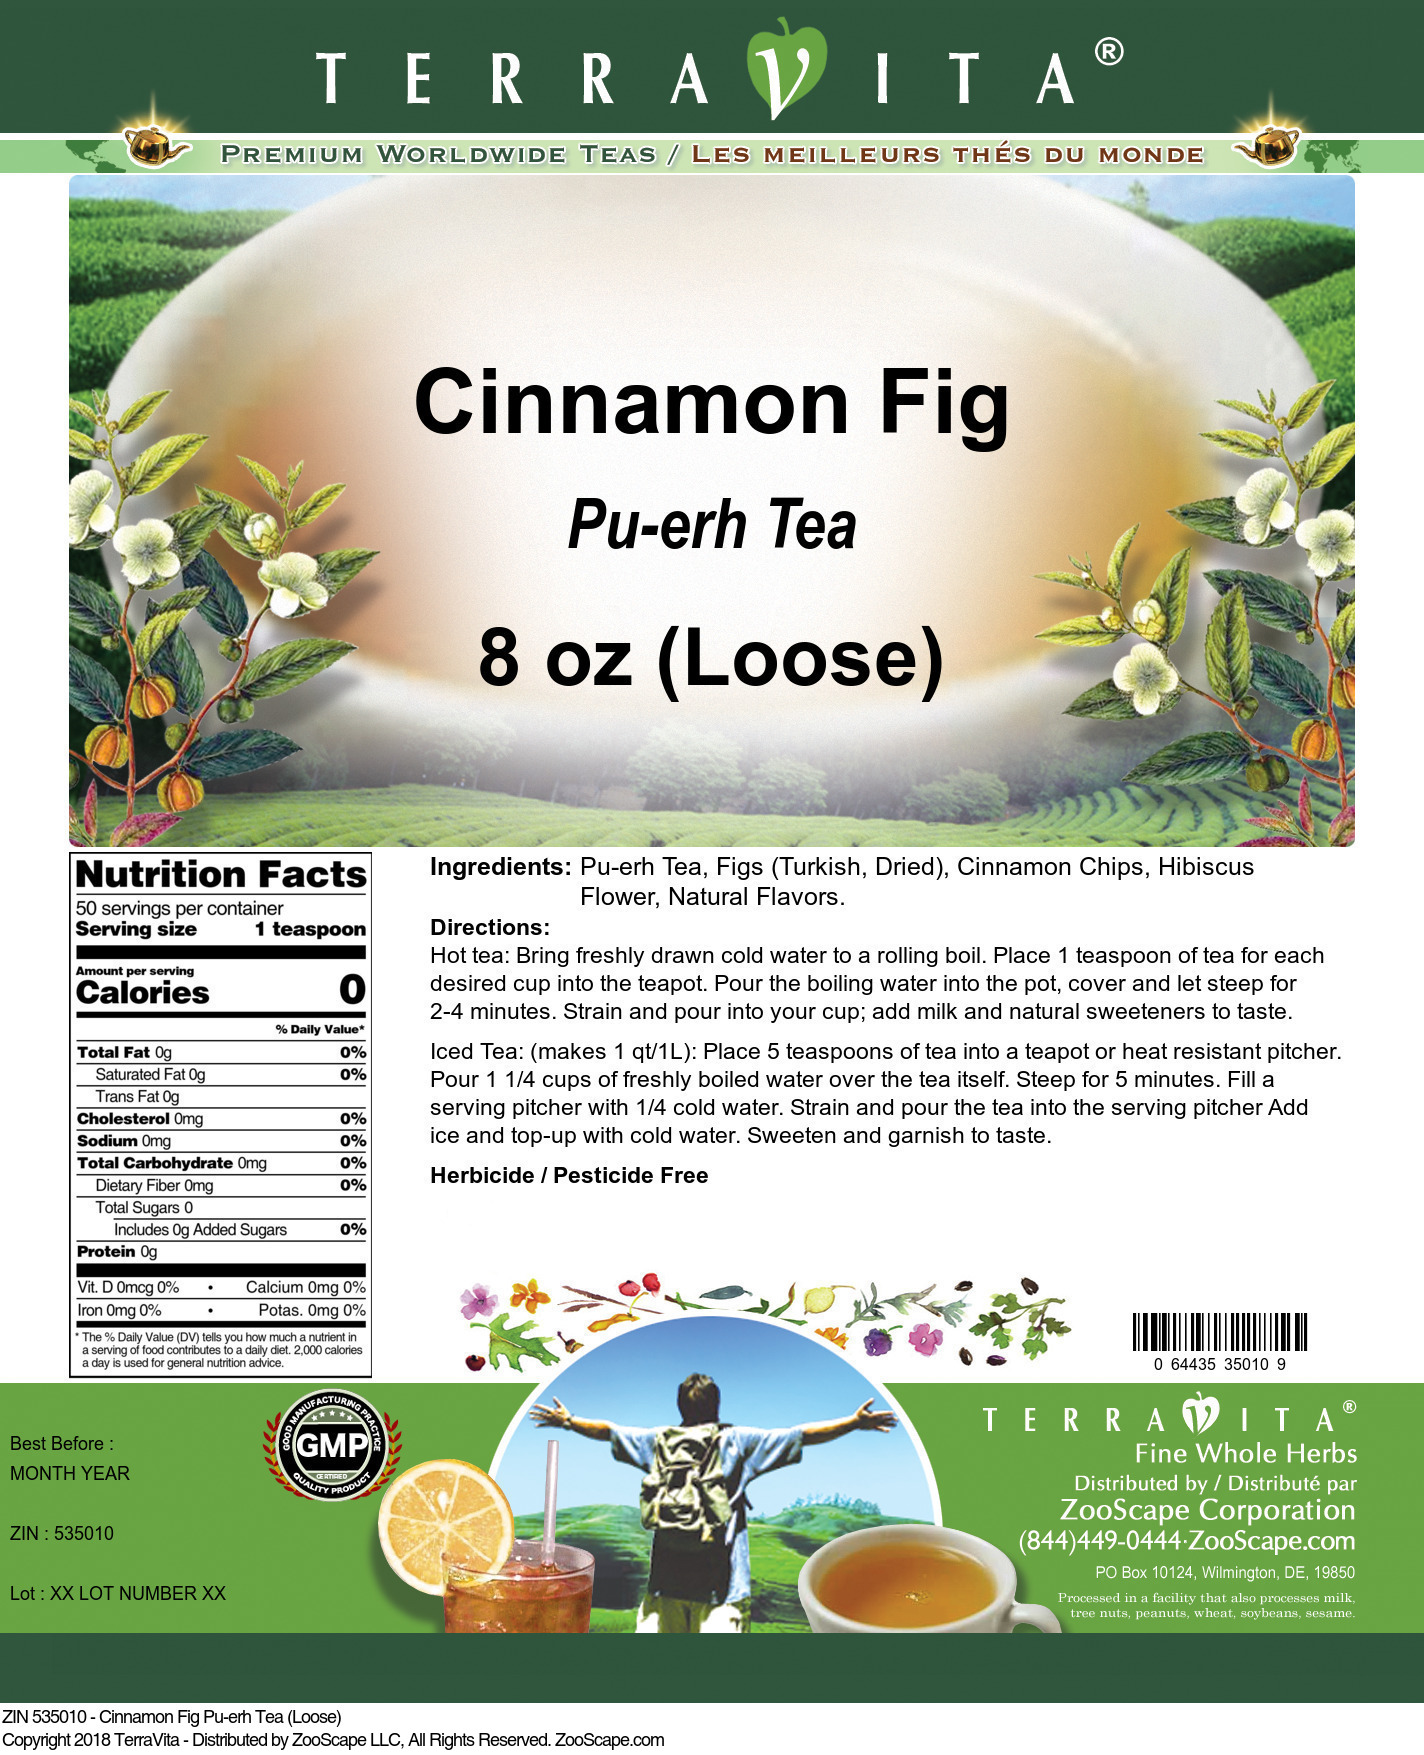 Cinnamon Fig Pu-erh Tea (Loose) - Label